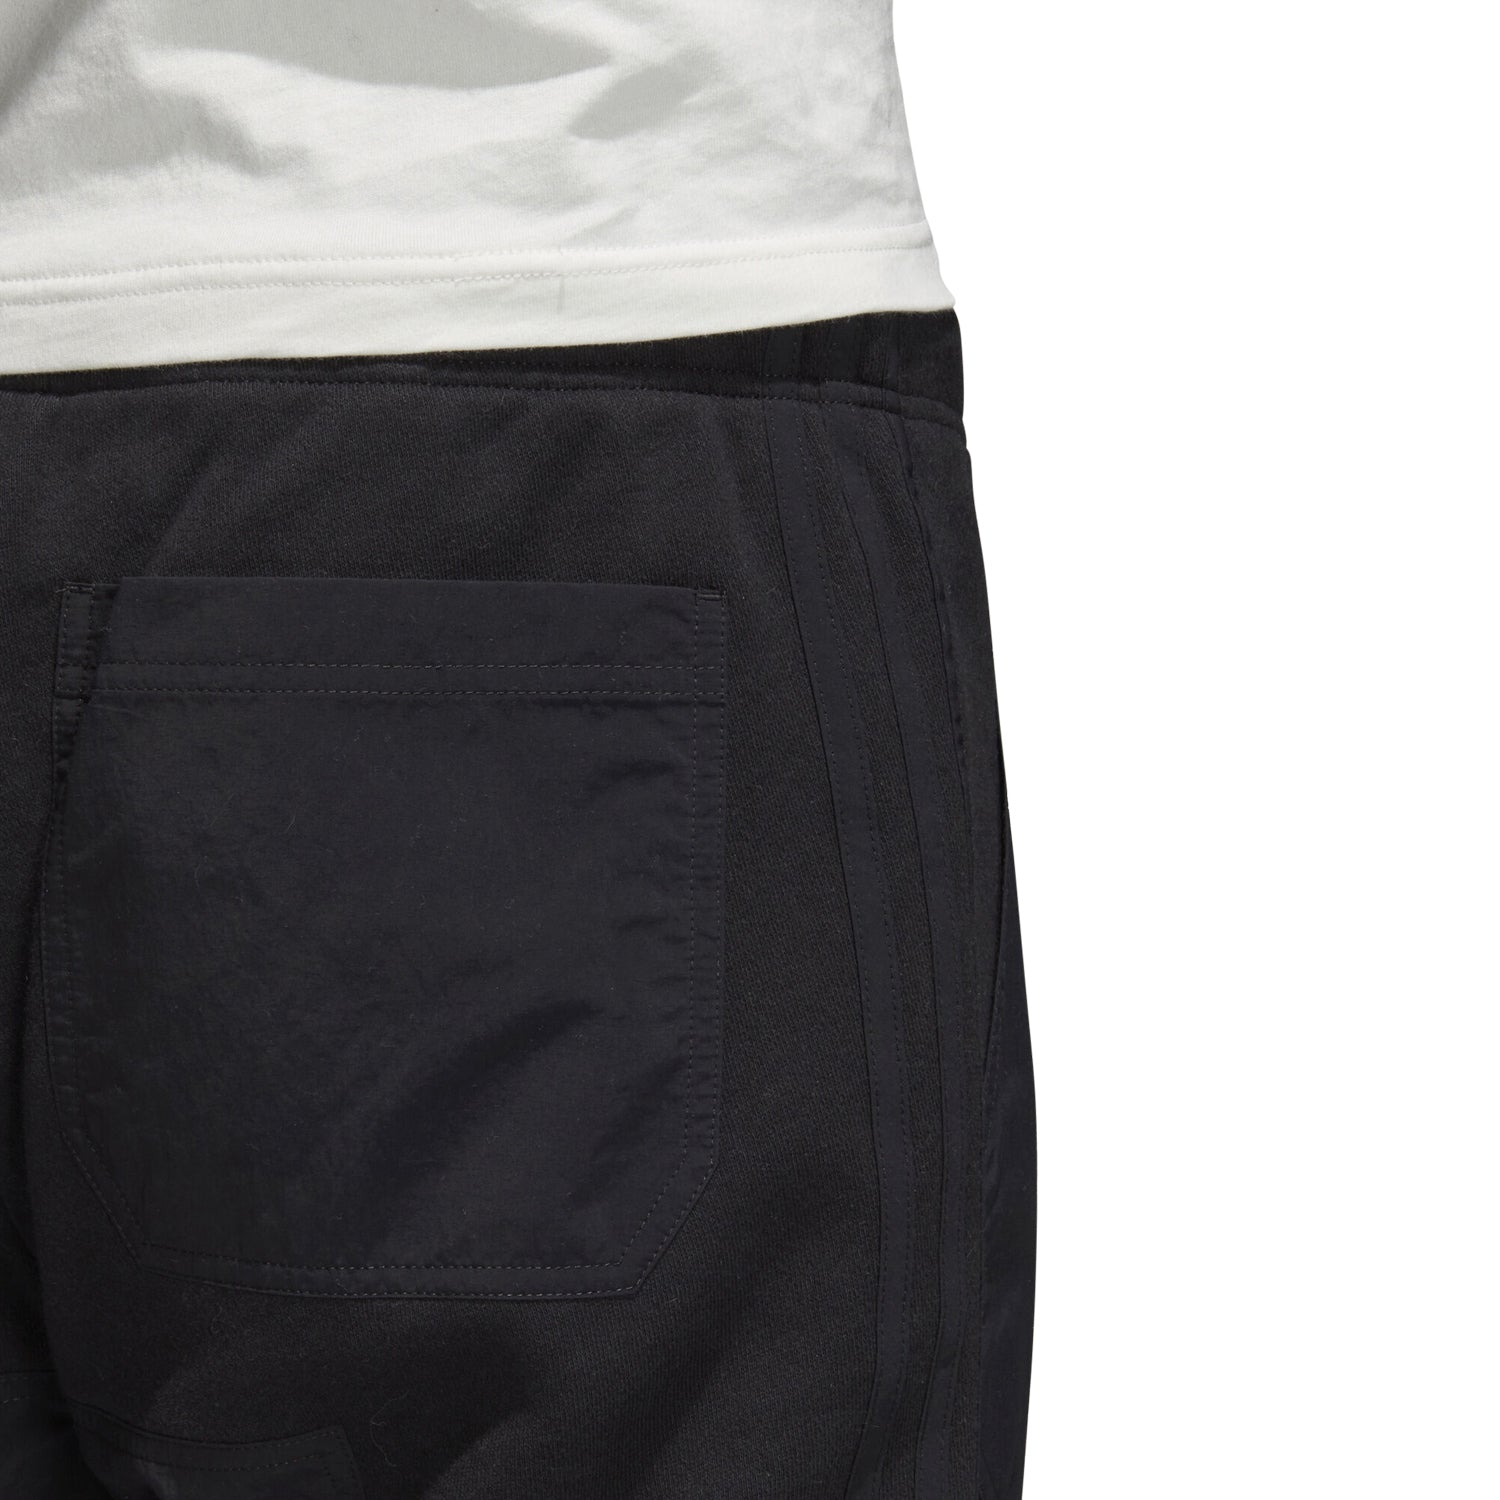 tradesports.co.uk adidas Originals NMD Sweat Pants Black